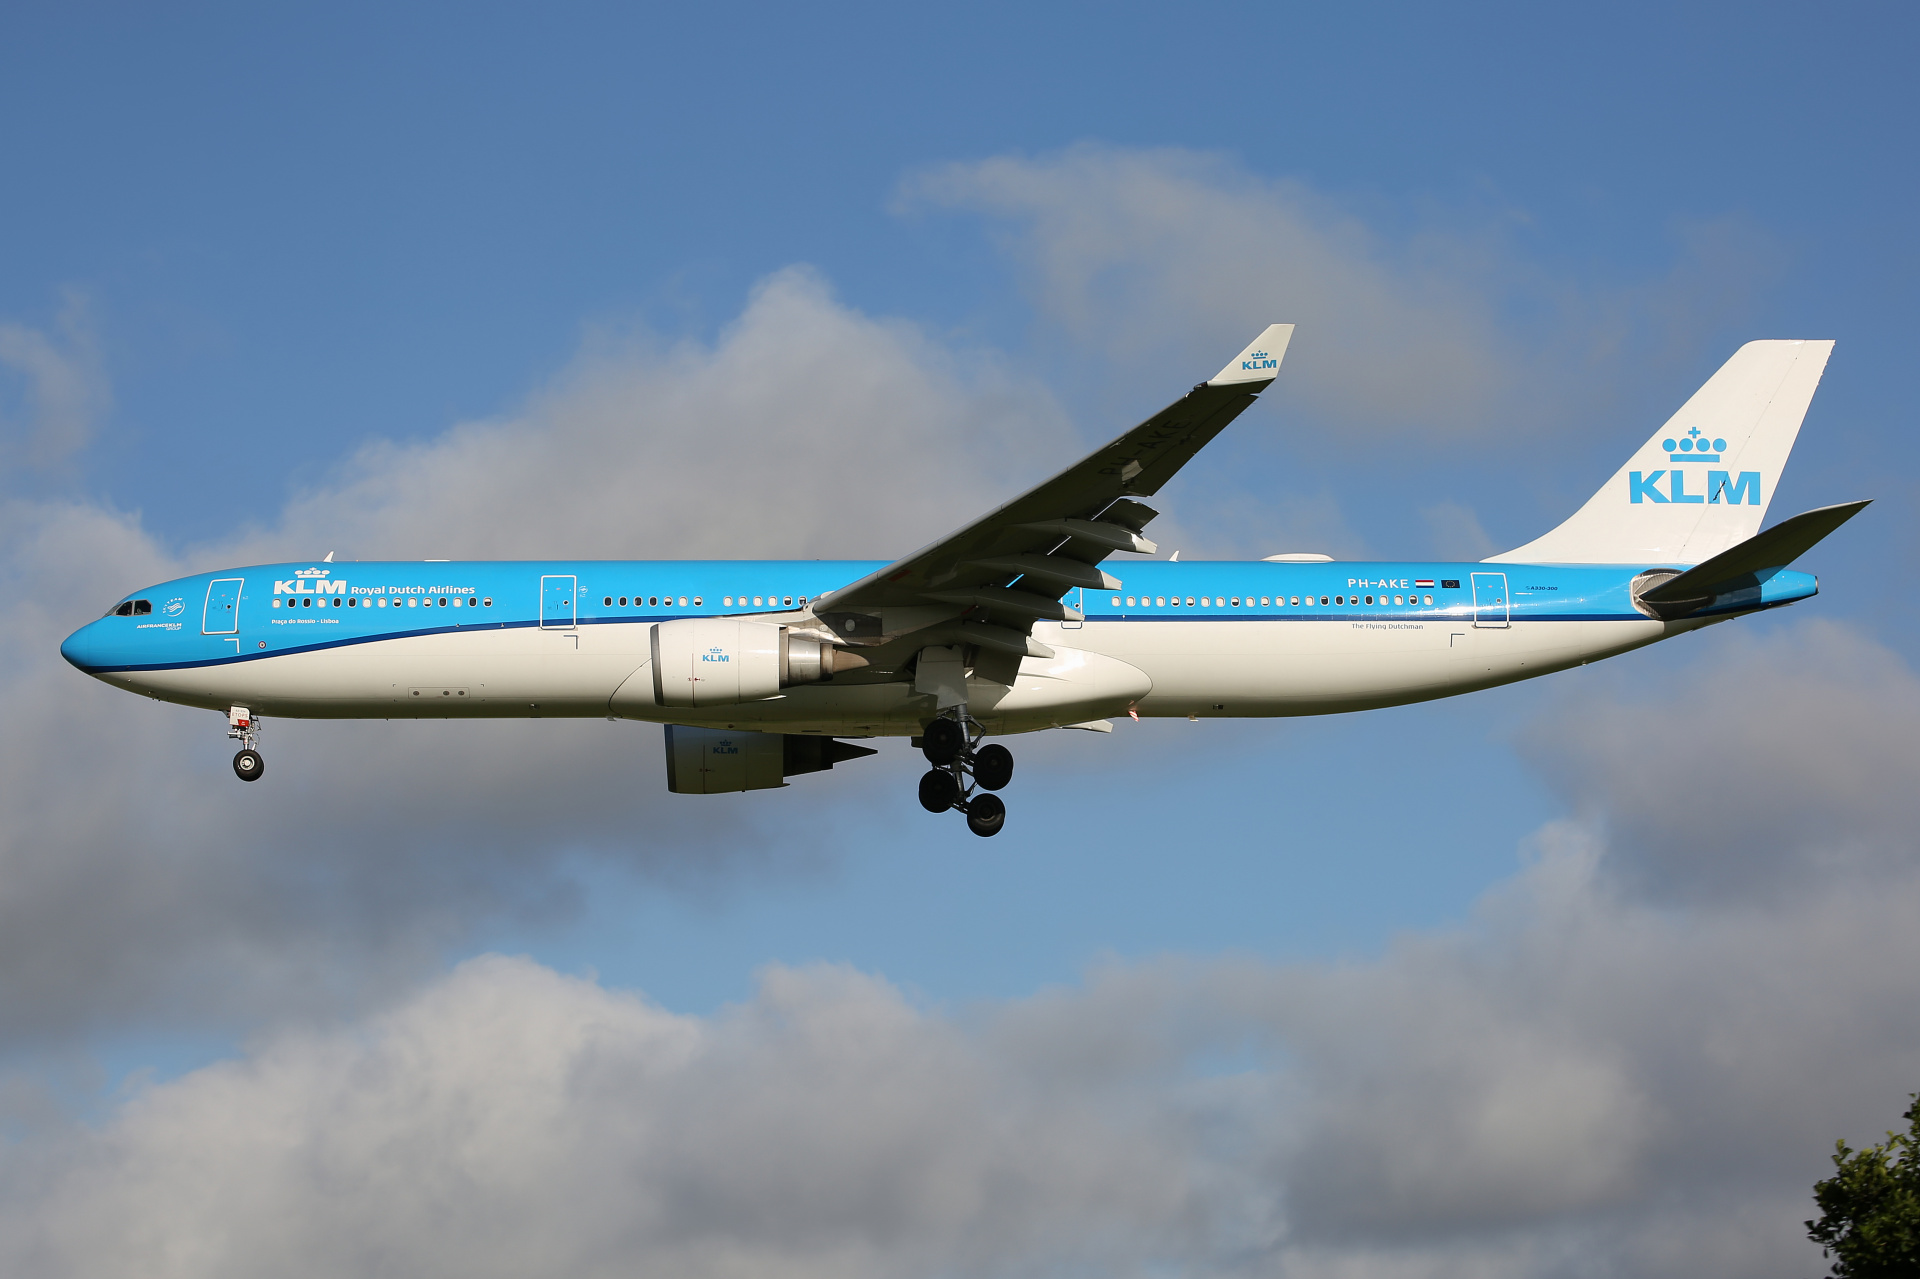 PH-AKE (Aircraft » Schiphol Spotting » Airbus A330-300 » KLM Royal Dutch Airlines)